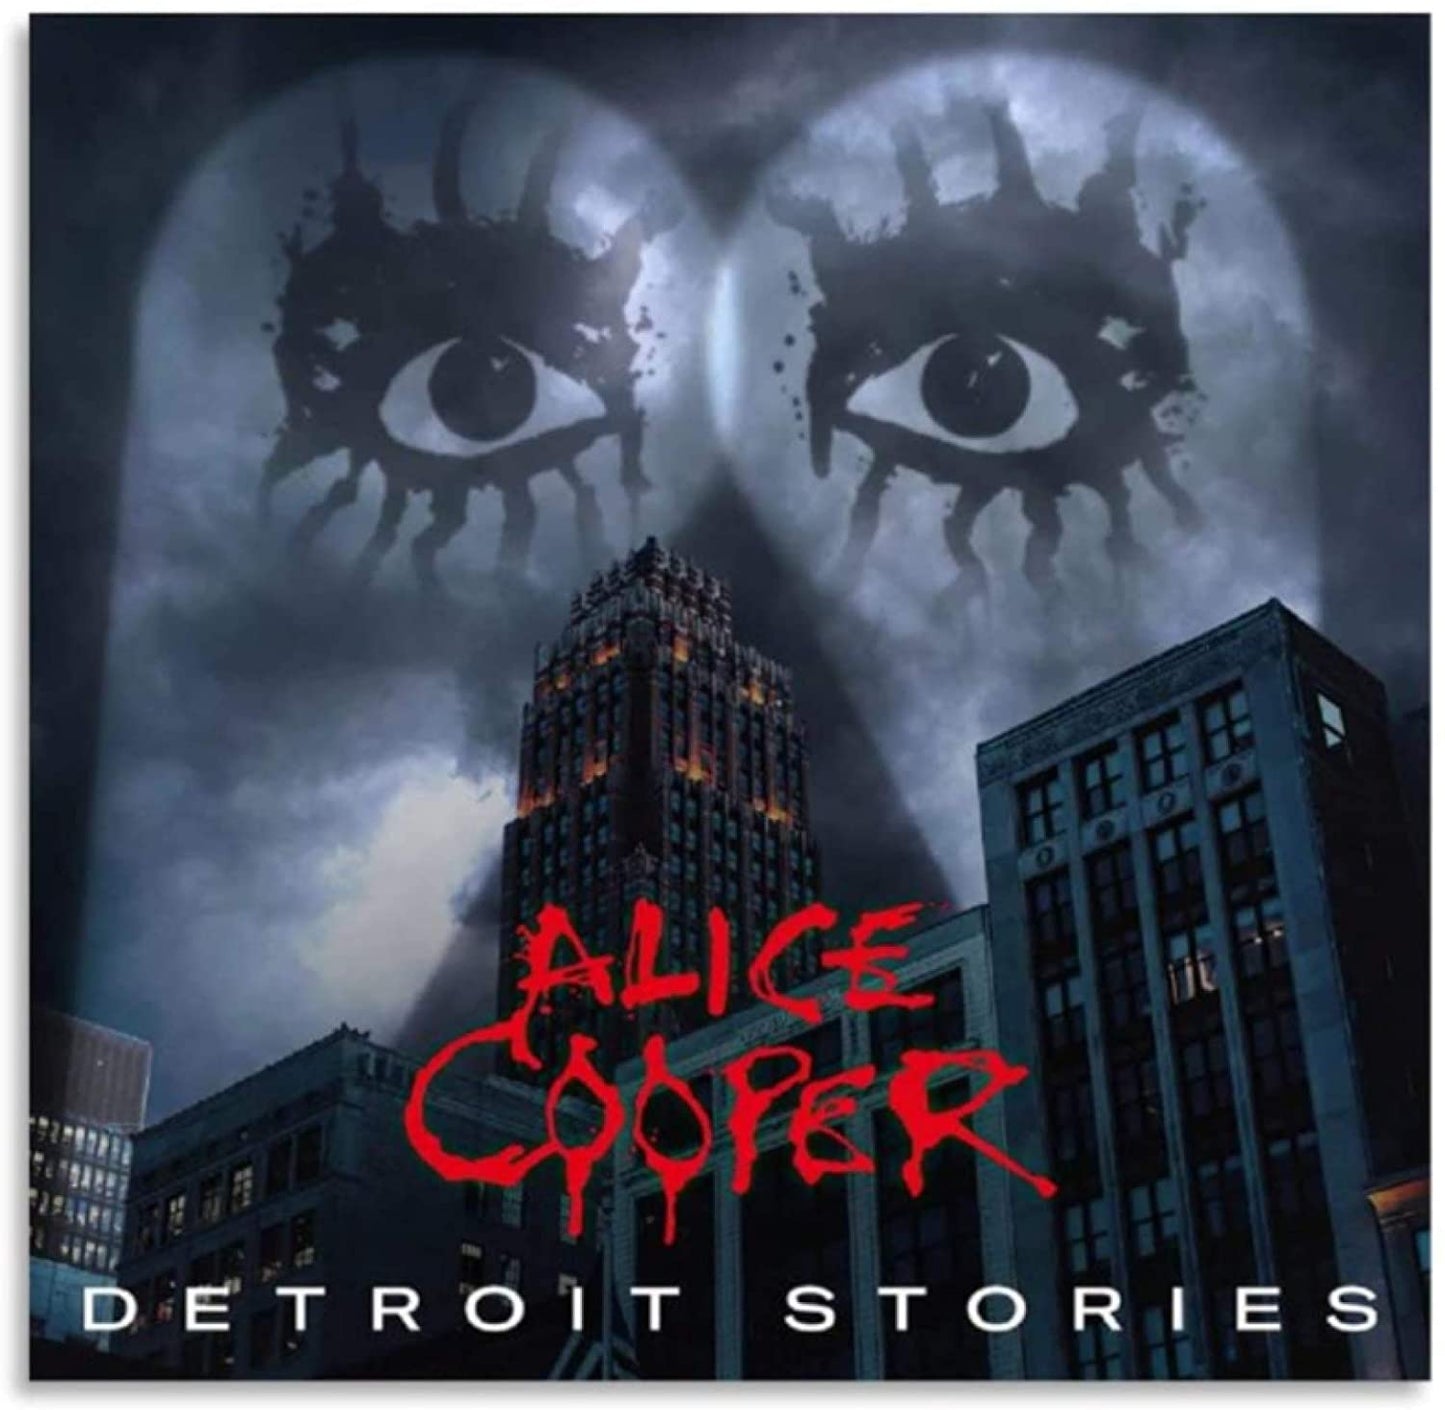 CD/DVD - Alice Cooper - Detroit Stories